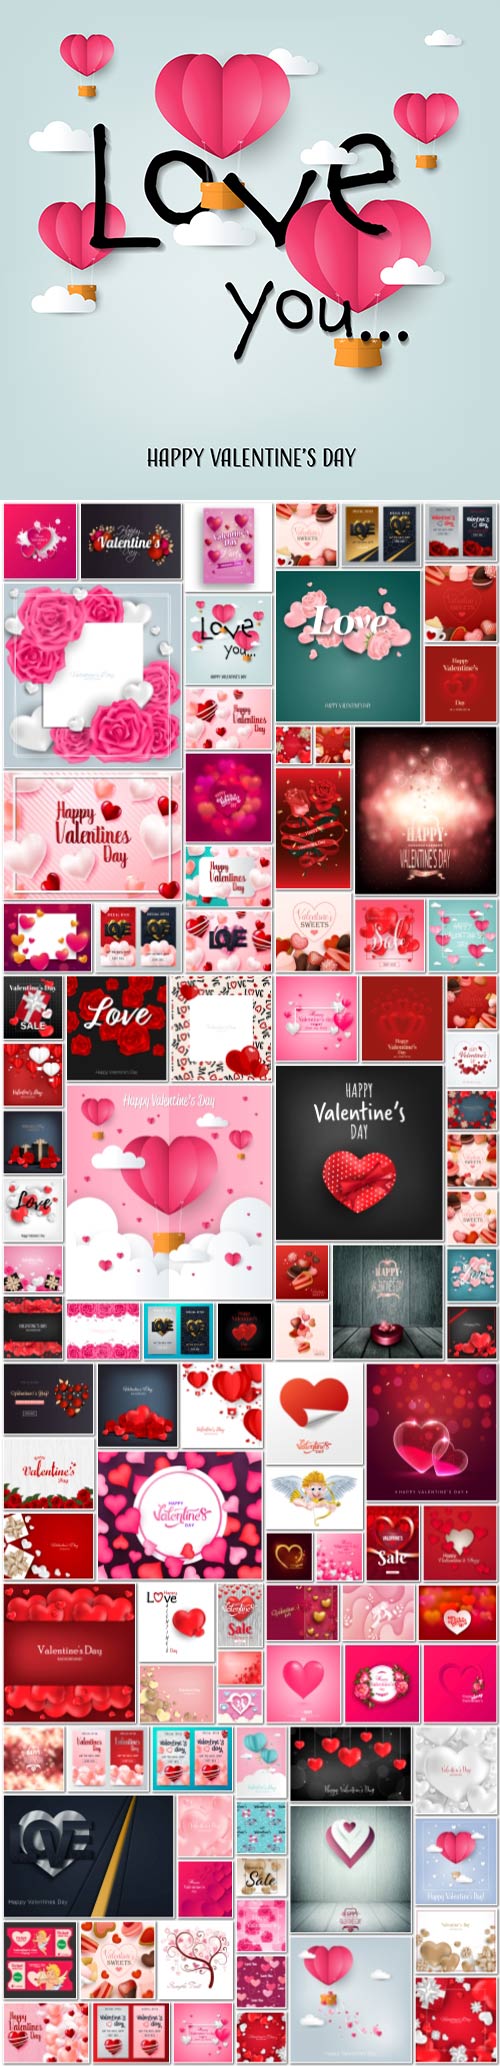 100 Bundle Happy Valentines Day, love, romance, hearts in vector vol 4